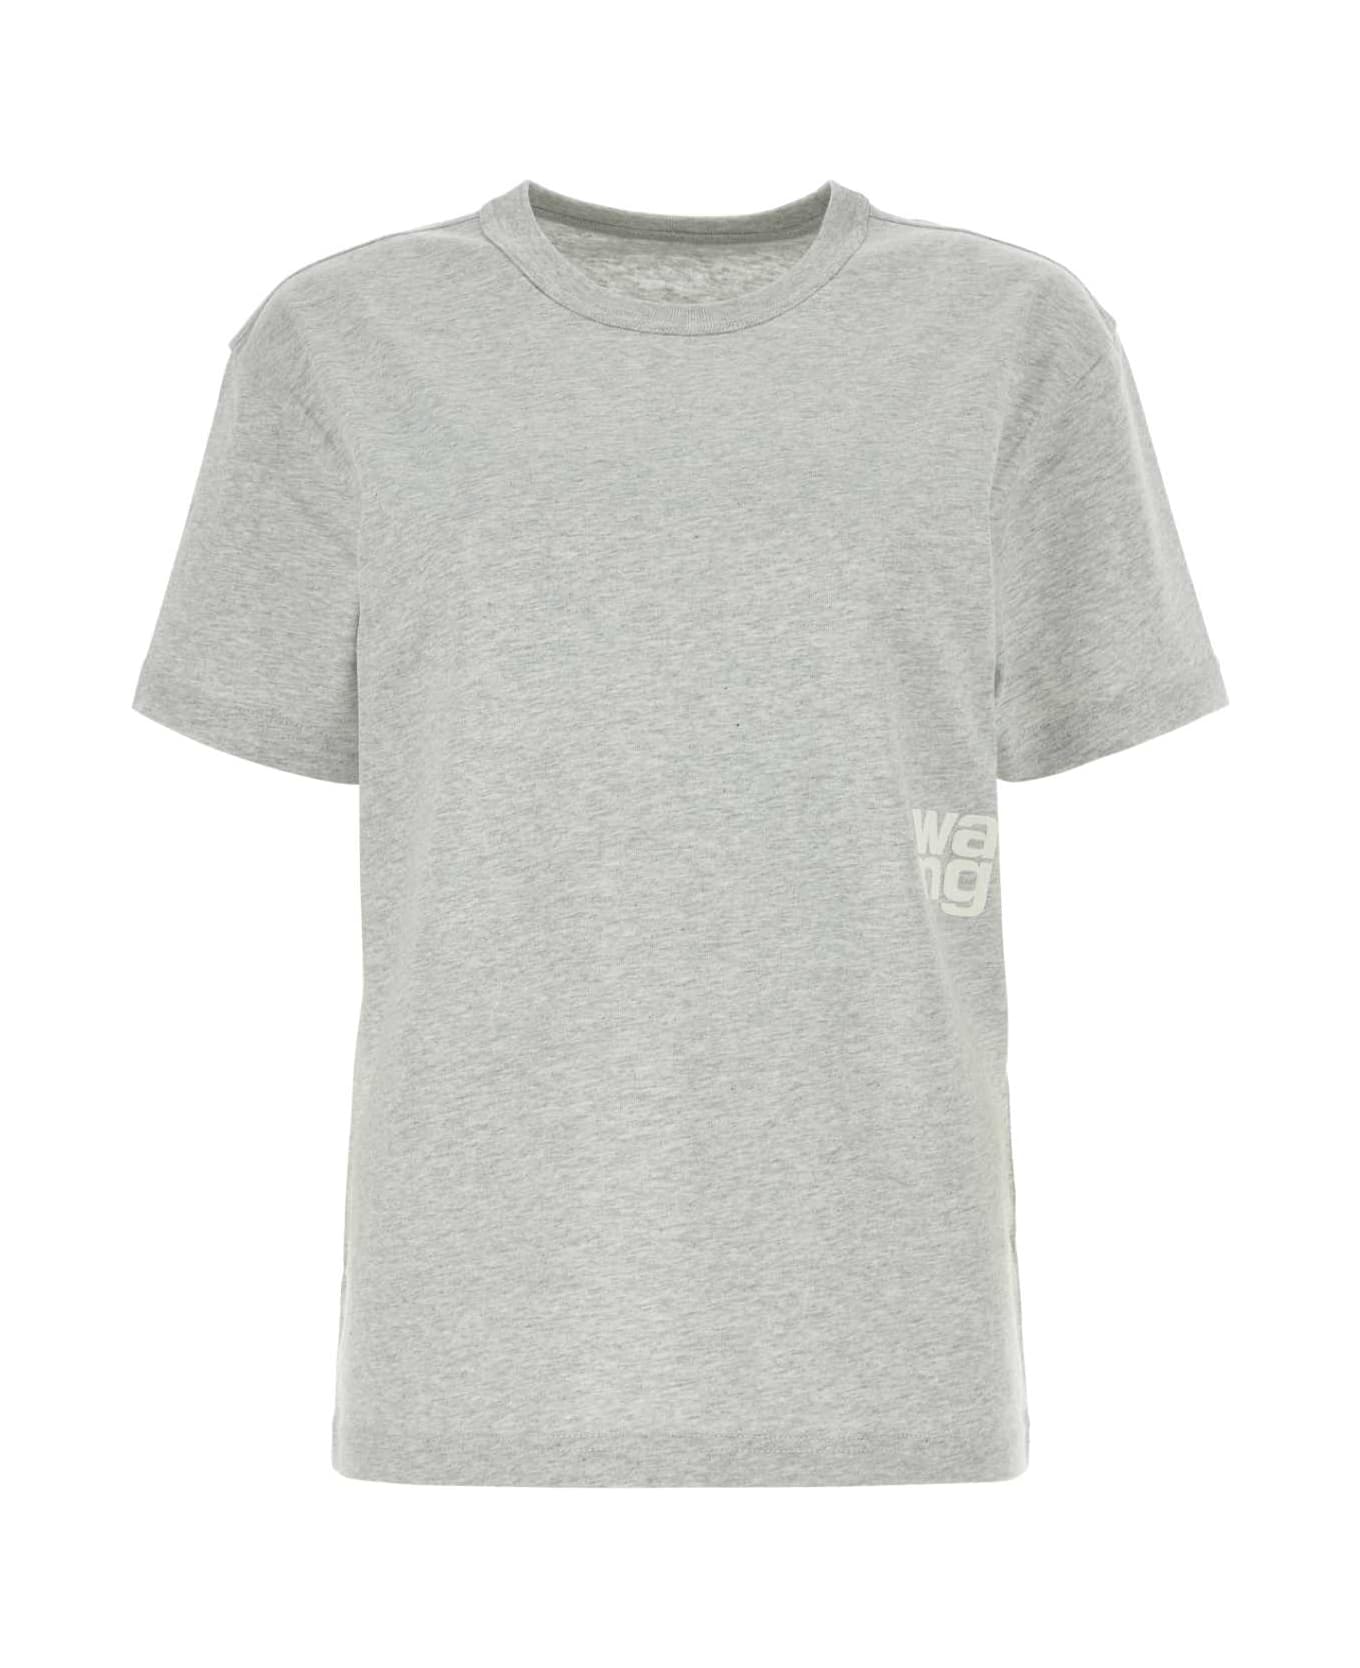 T by Alexander Wang Melange Grey Cotton Oversize T-shirt - LIGHTHEATHERGREY Tシャツ